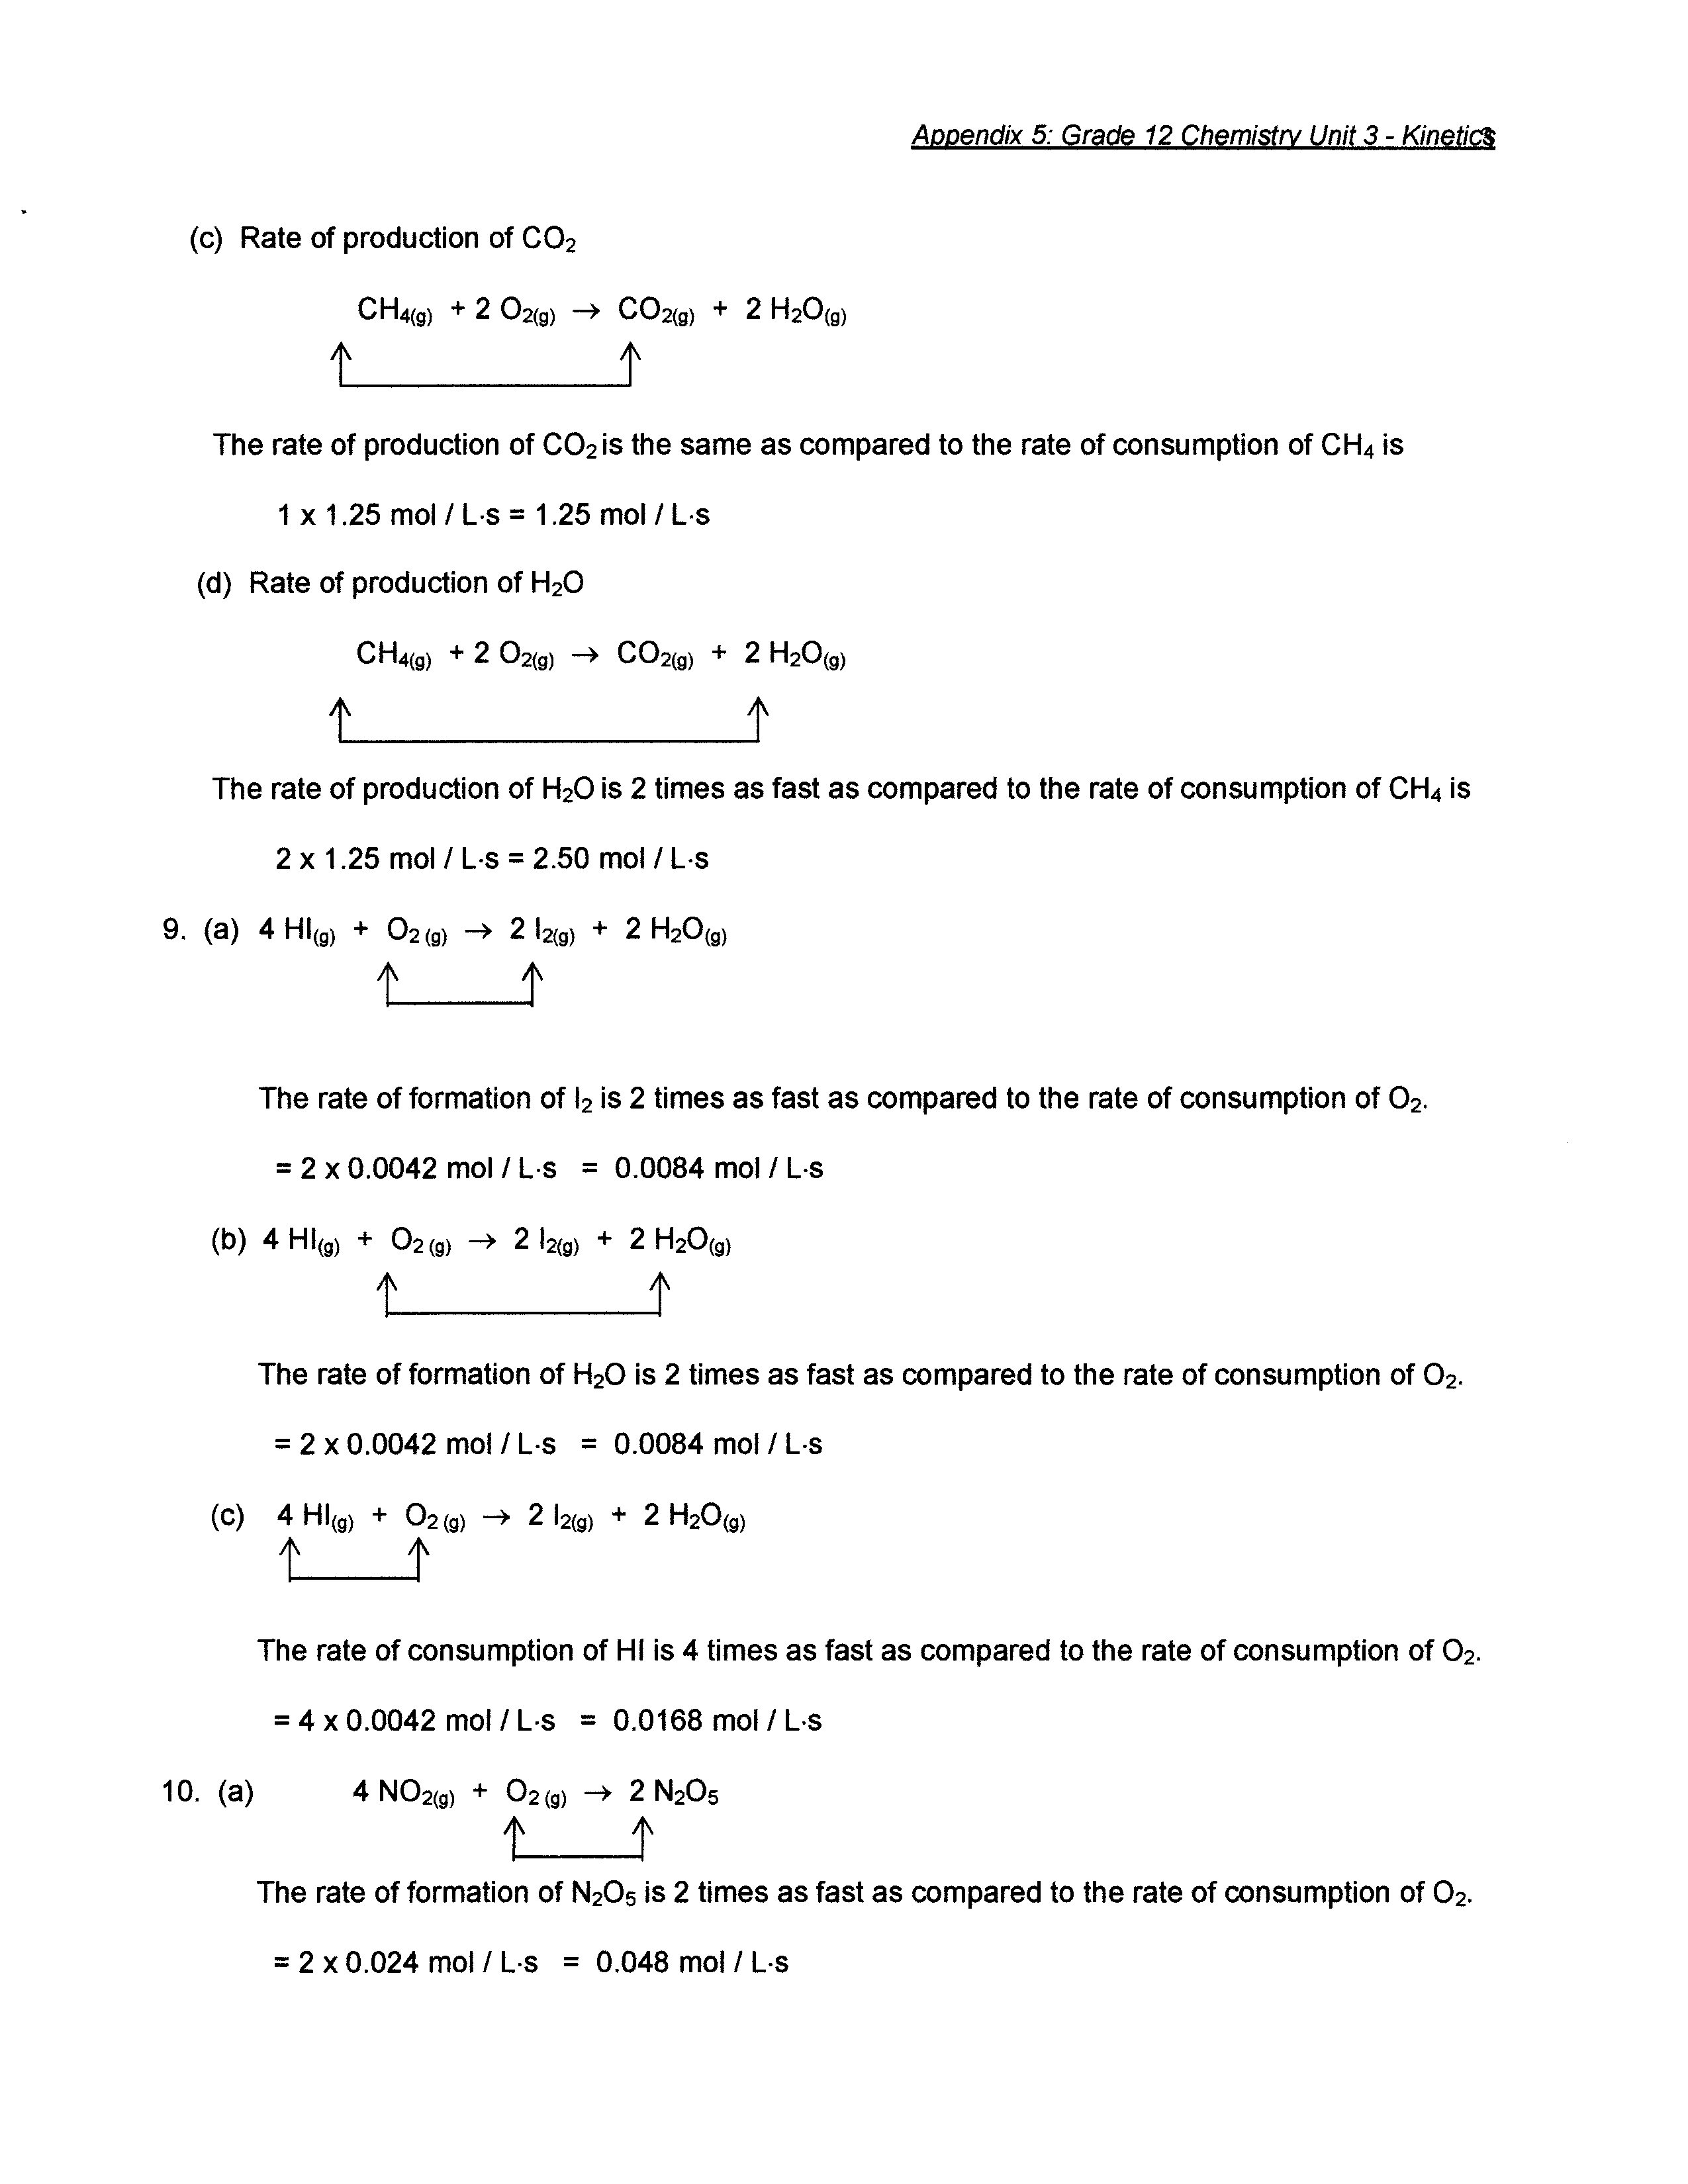 13-worksheet-reaction-rates-answer-worksheeto